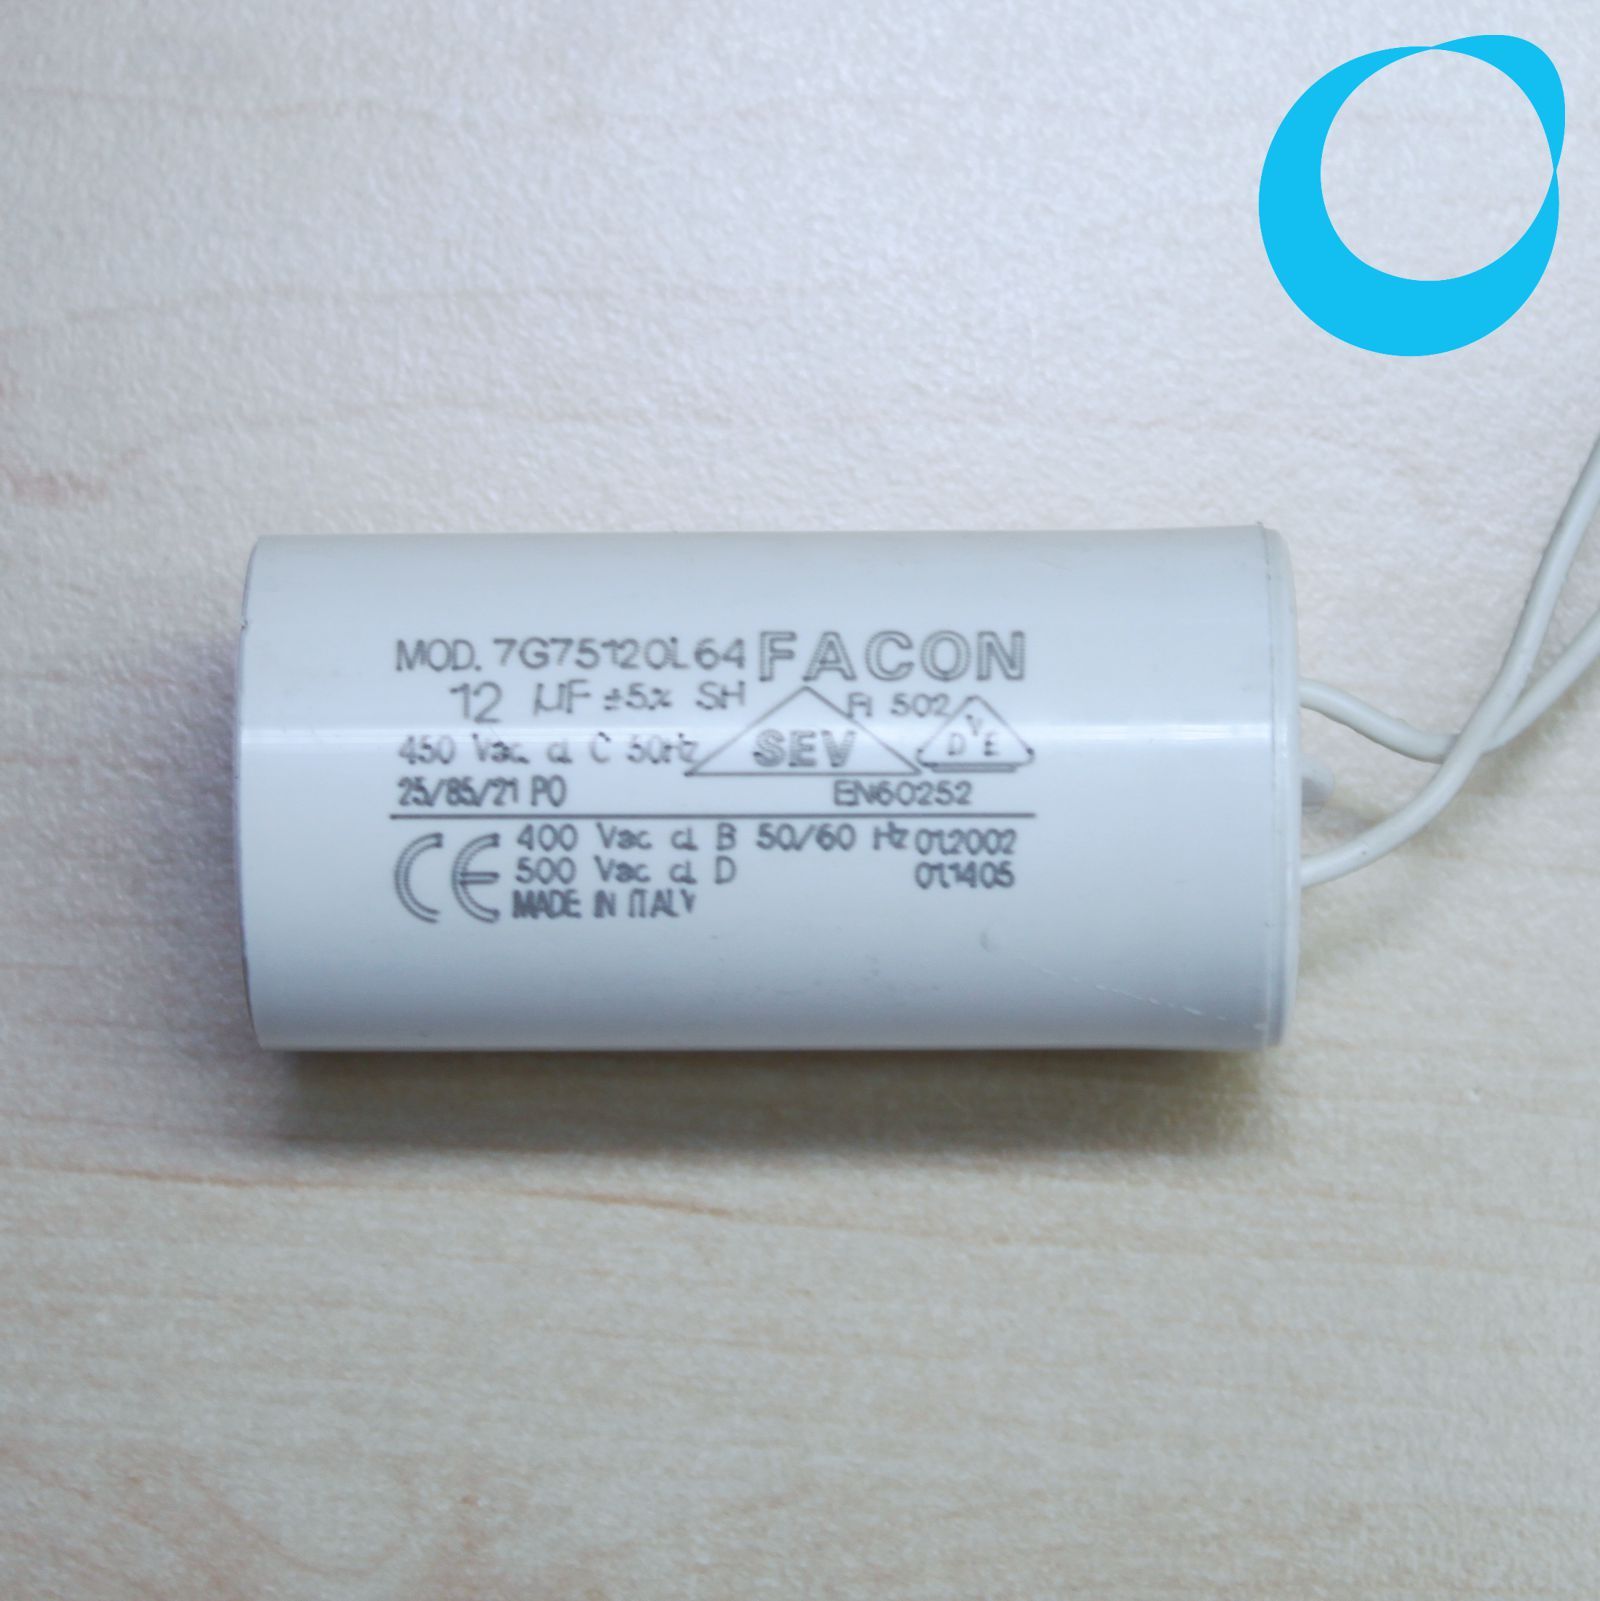 facon-12-yF-mF-7G75120L64-450VAC-50Hz-500VAC-400VAC-Kondensator